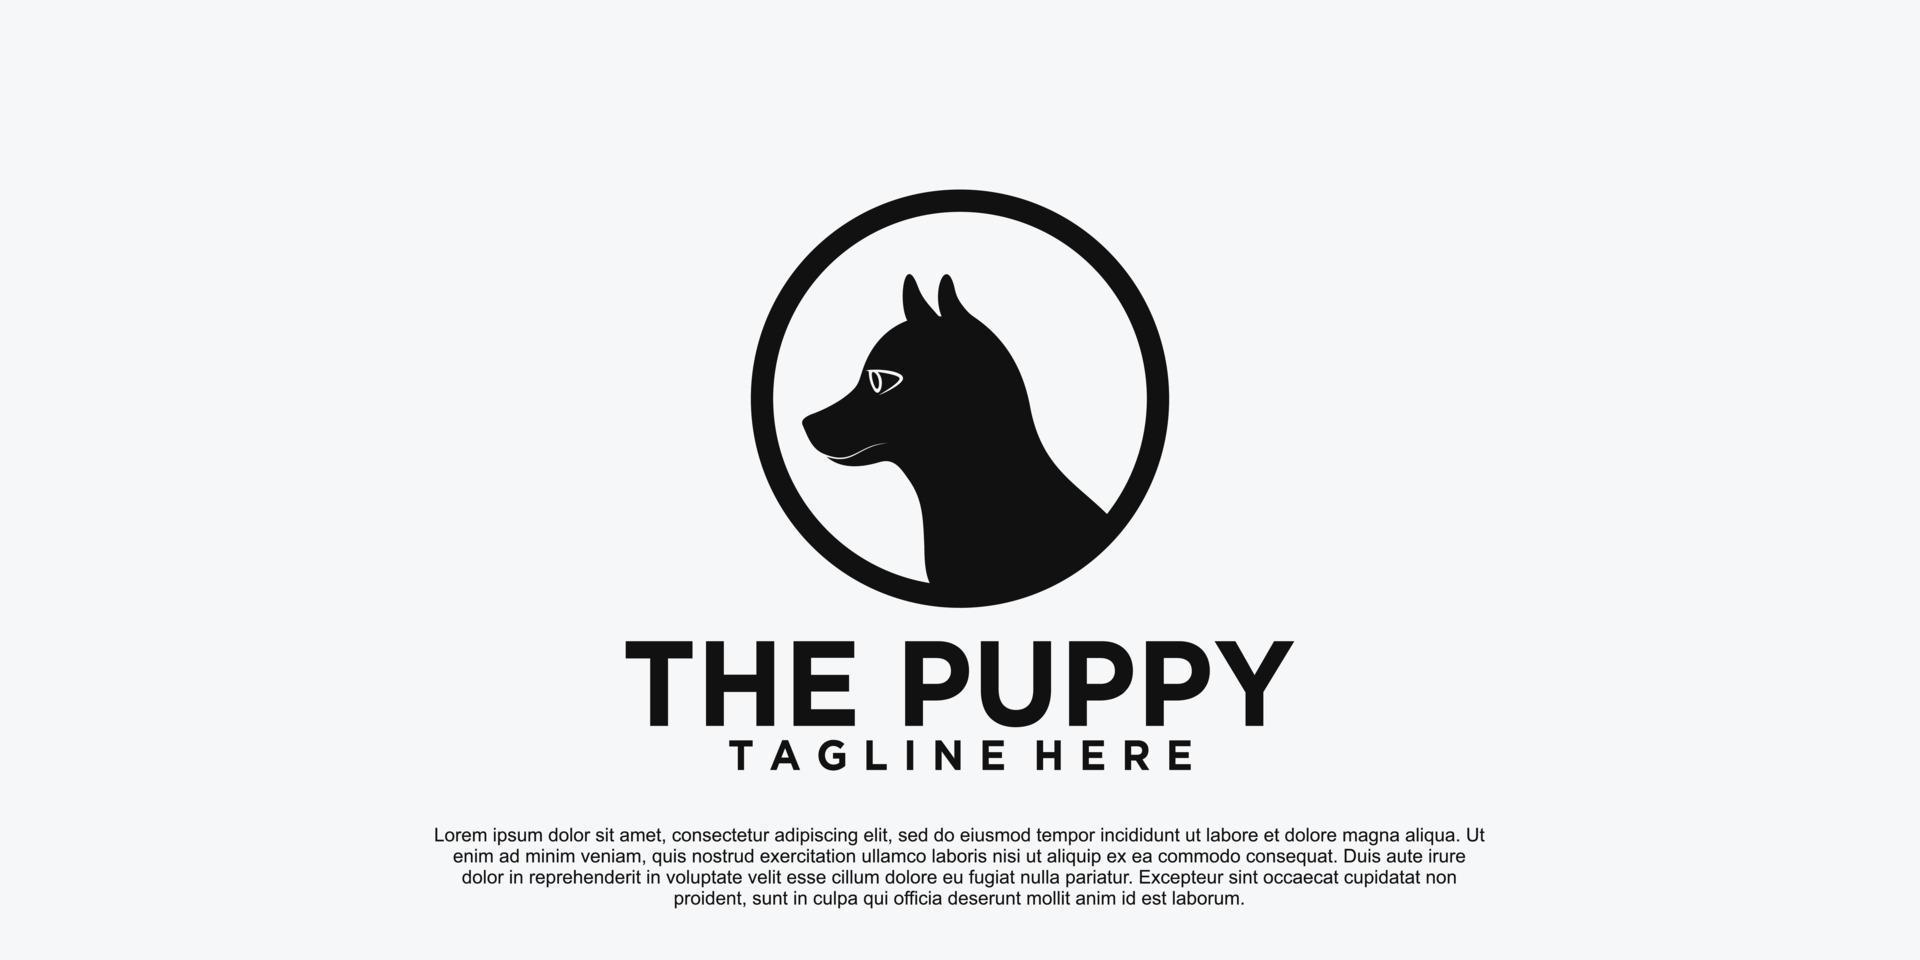 o design do logotipo do filhote de cachorro vetor premium exclusivo